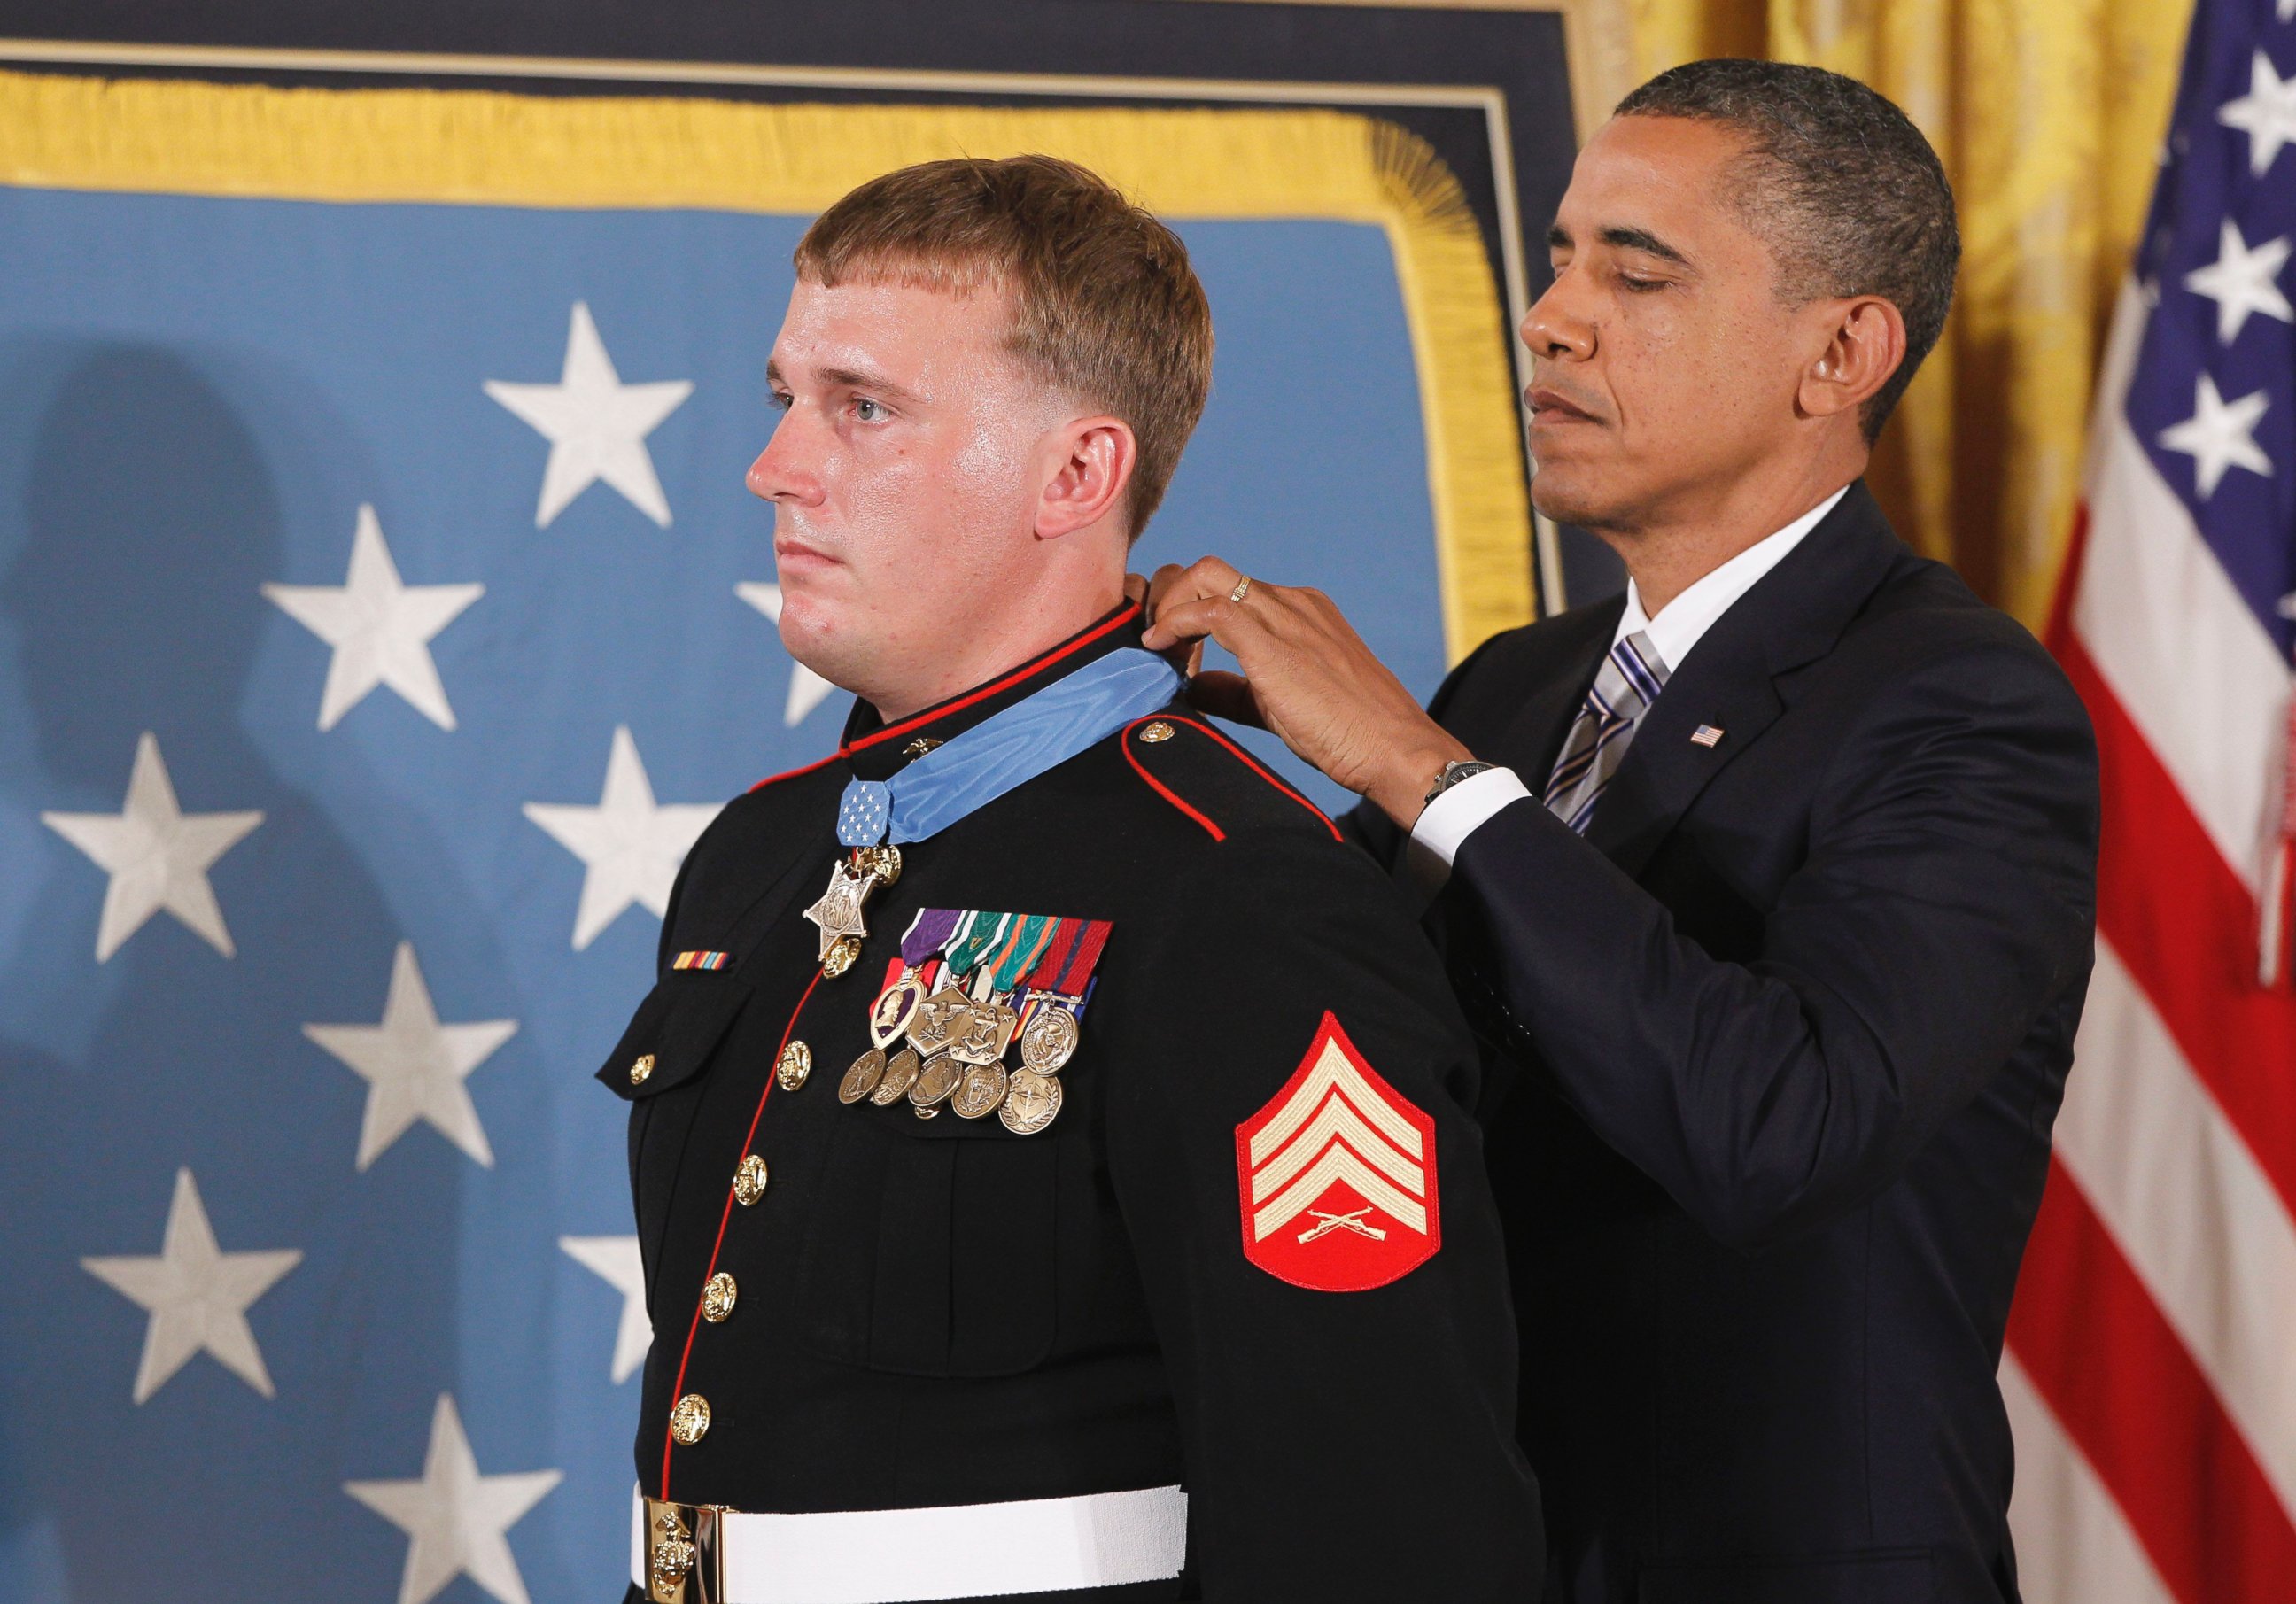 PHOTO: President Barack Obama awards the Medal of Honor to former Marine Cpl. Dakota Meyer, 23, from Greensburg, Ky. on Sept. 15, 2011.